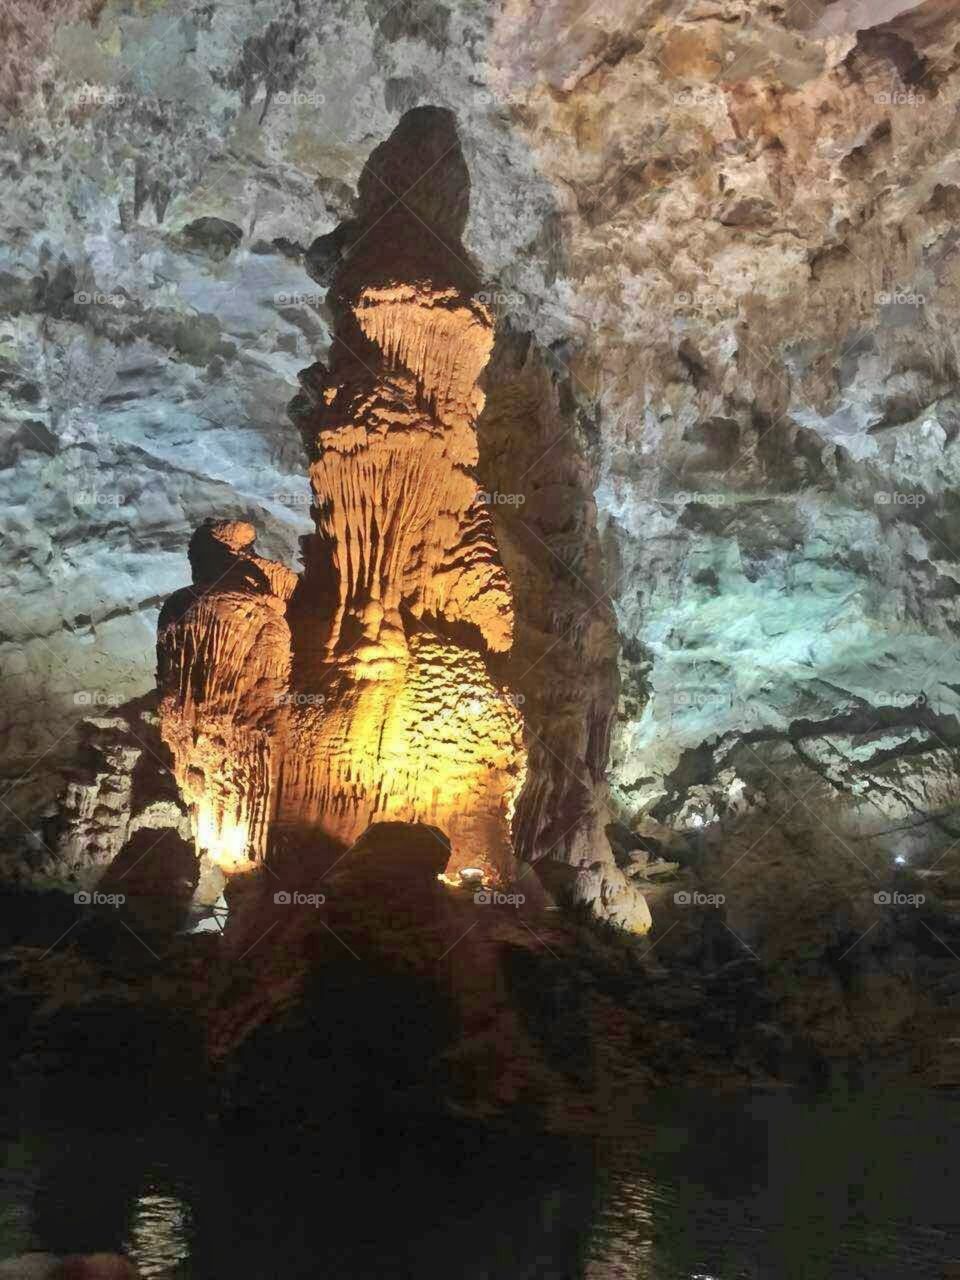 Vietnam's cave